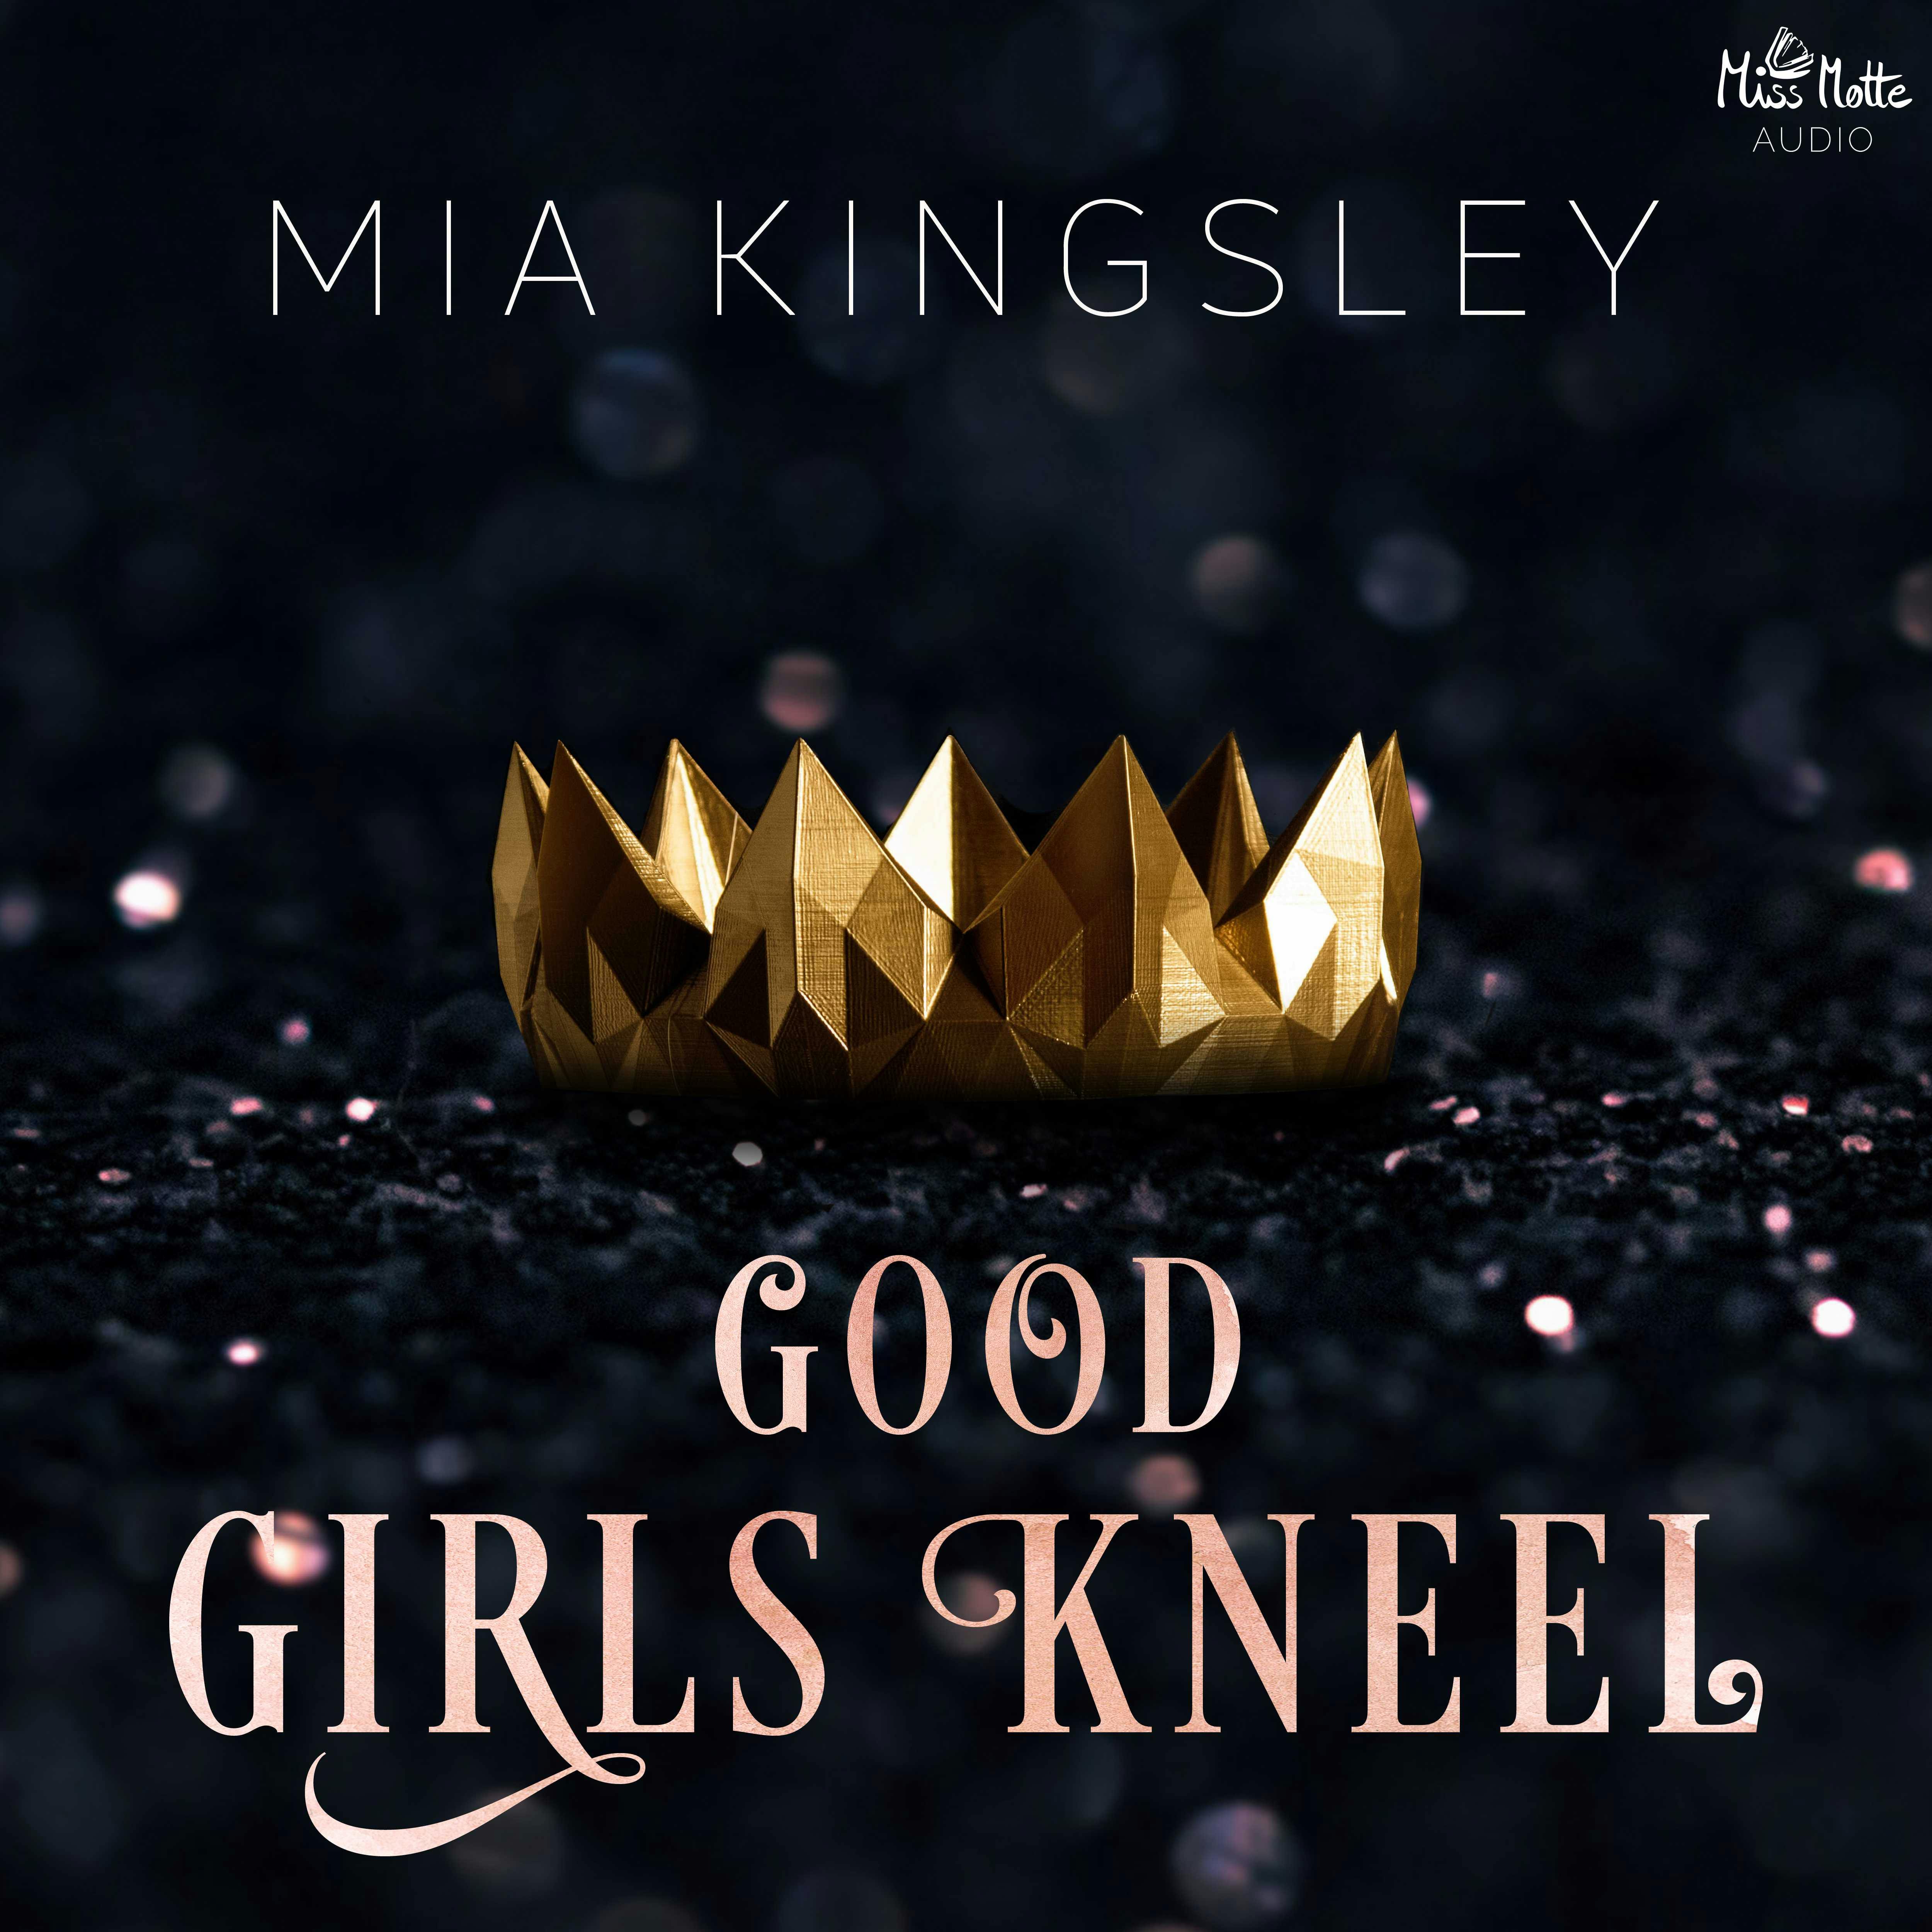 Good Girls Kneel - undefined